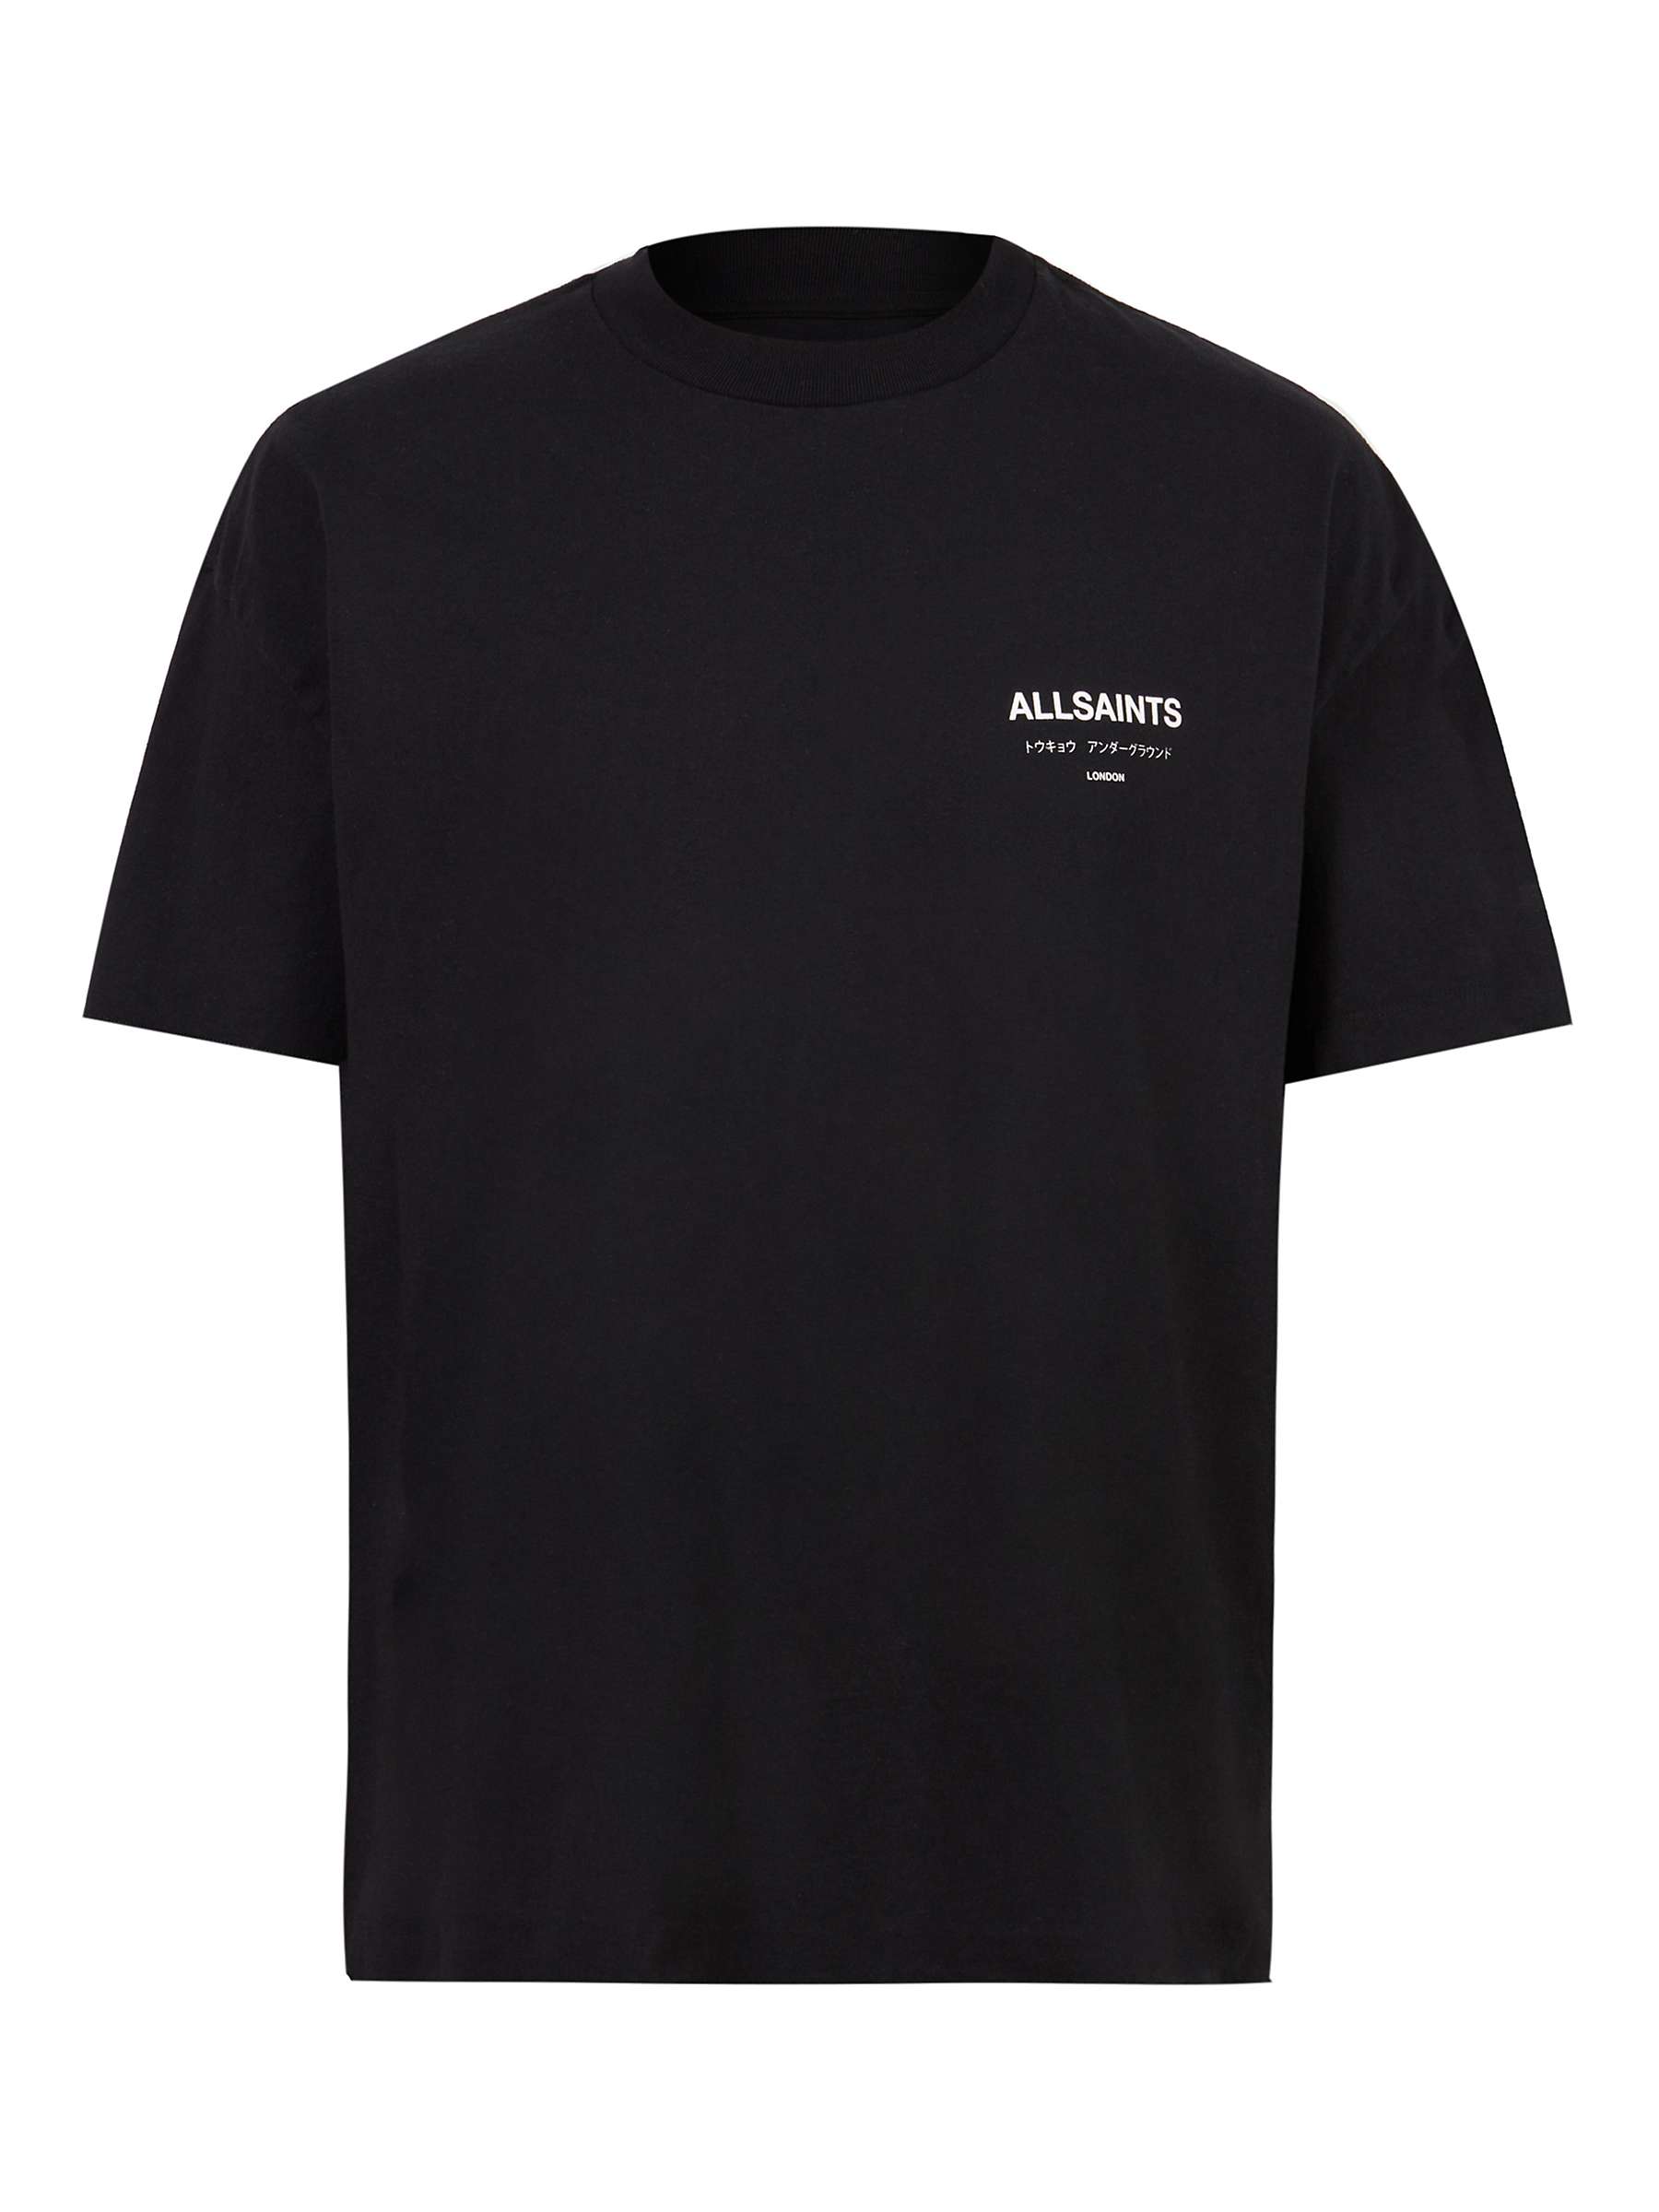 AllSaints Underground Oversized T-Shirt, Jet Black at John Lewis & Partners